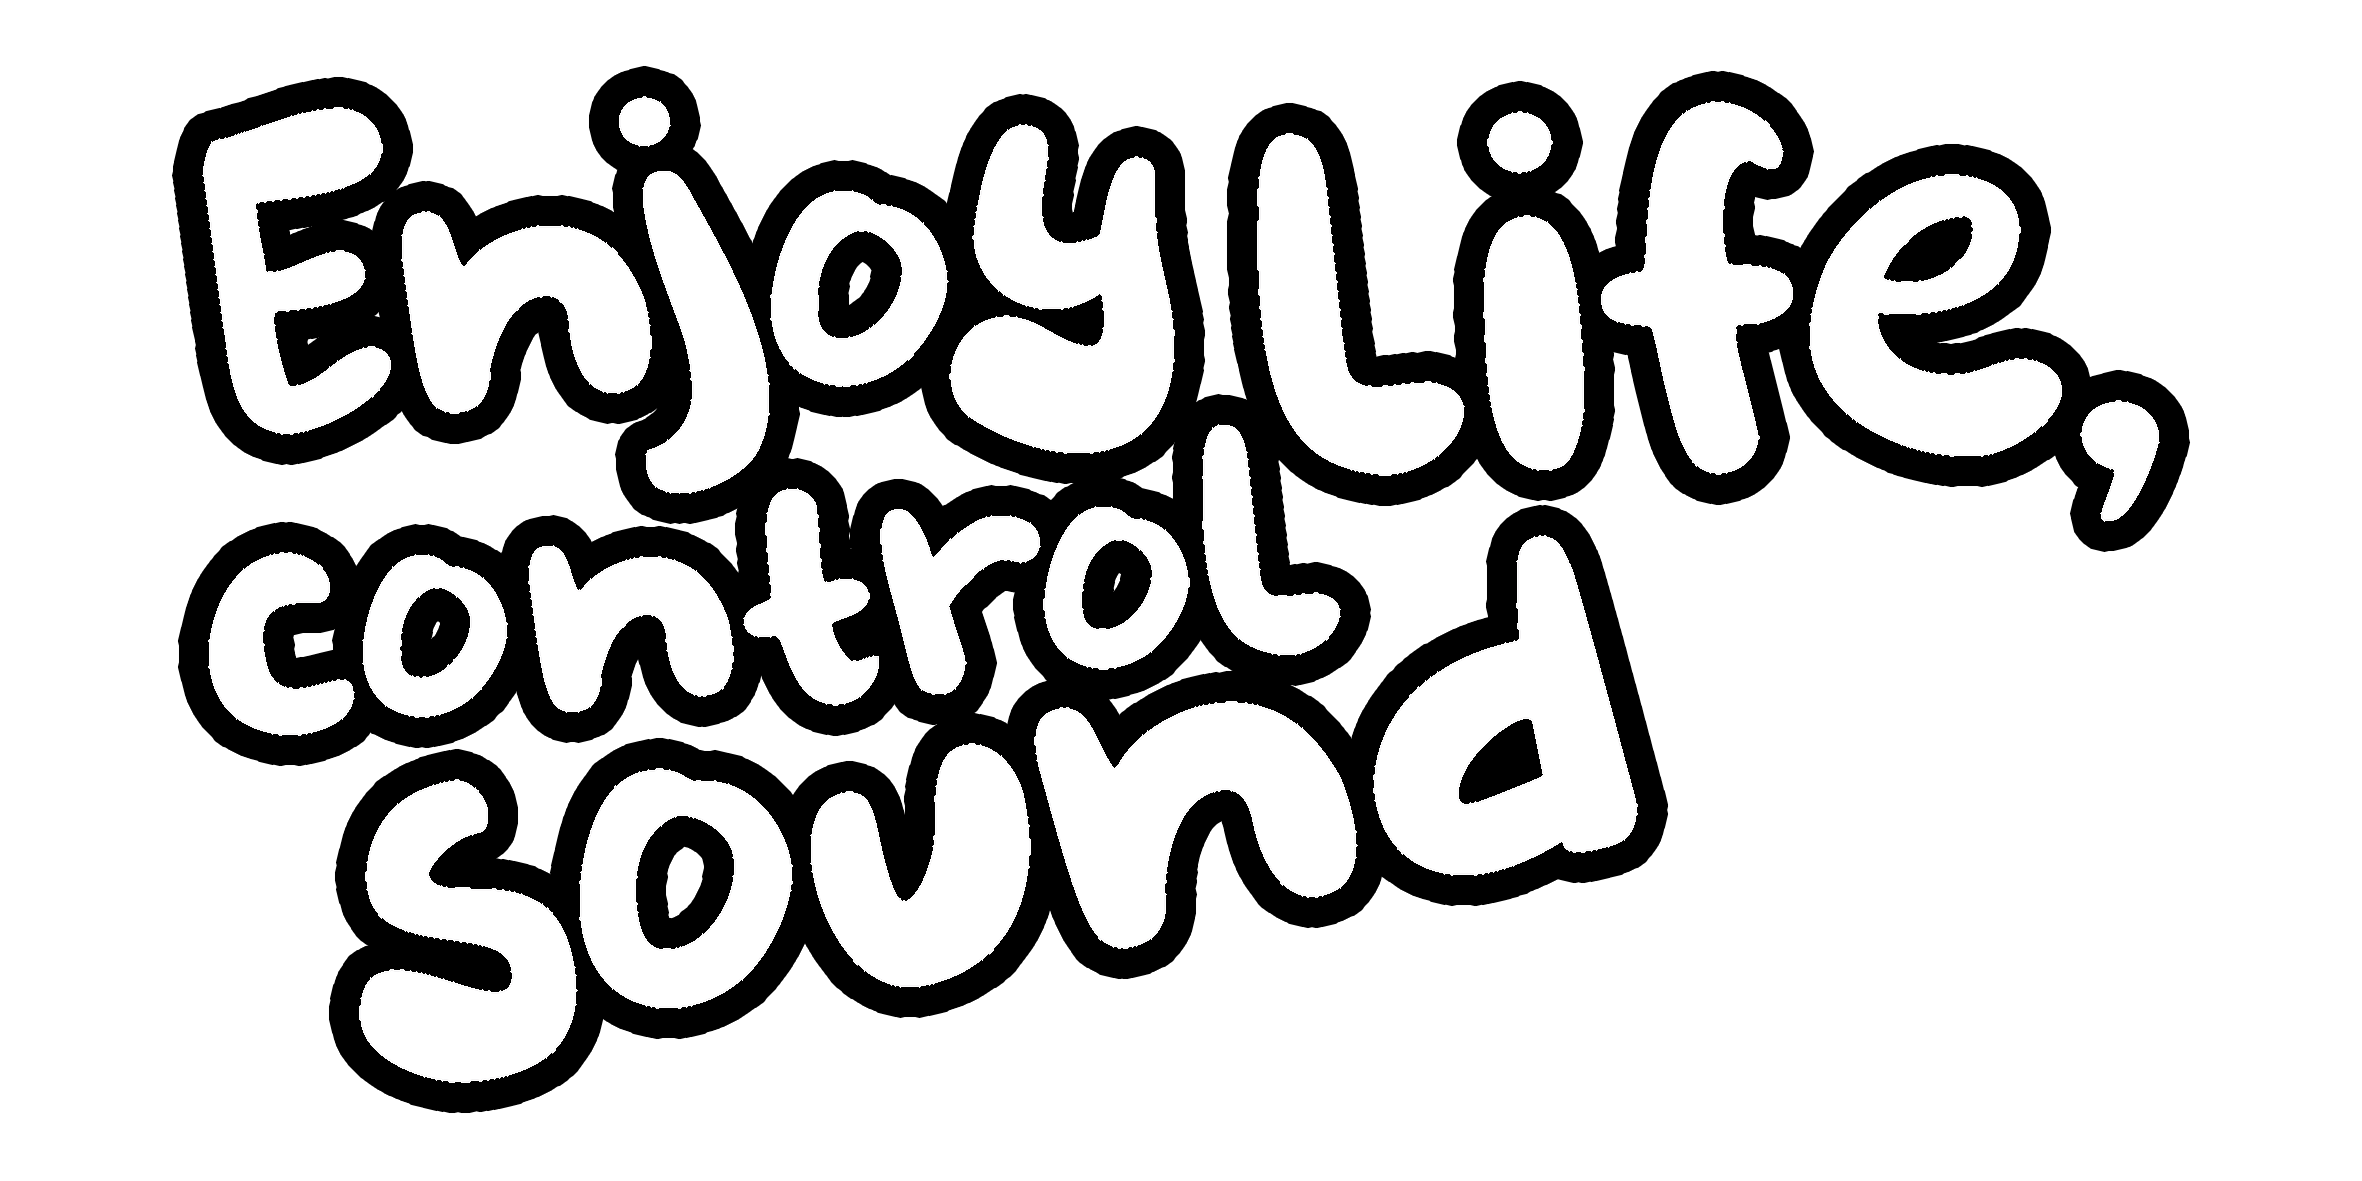 Pluggerz tagline Enjoy Life, control sound